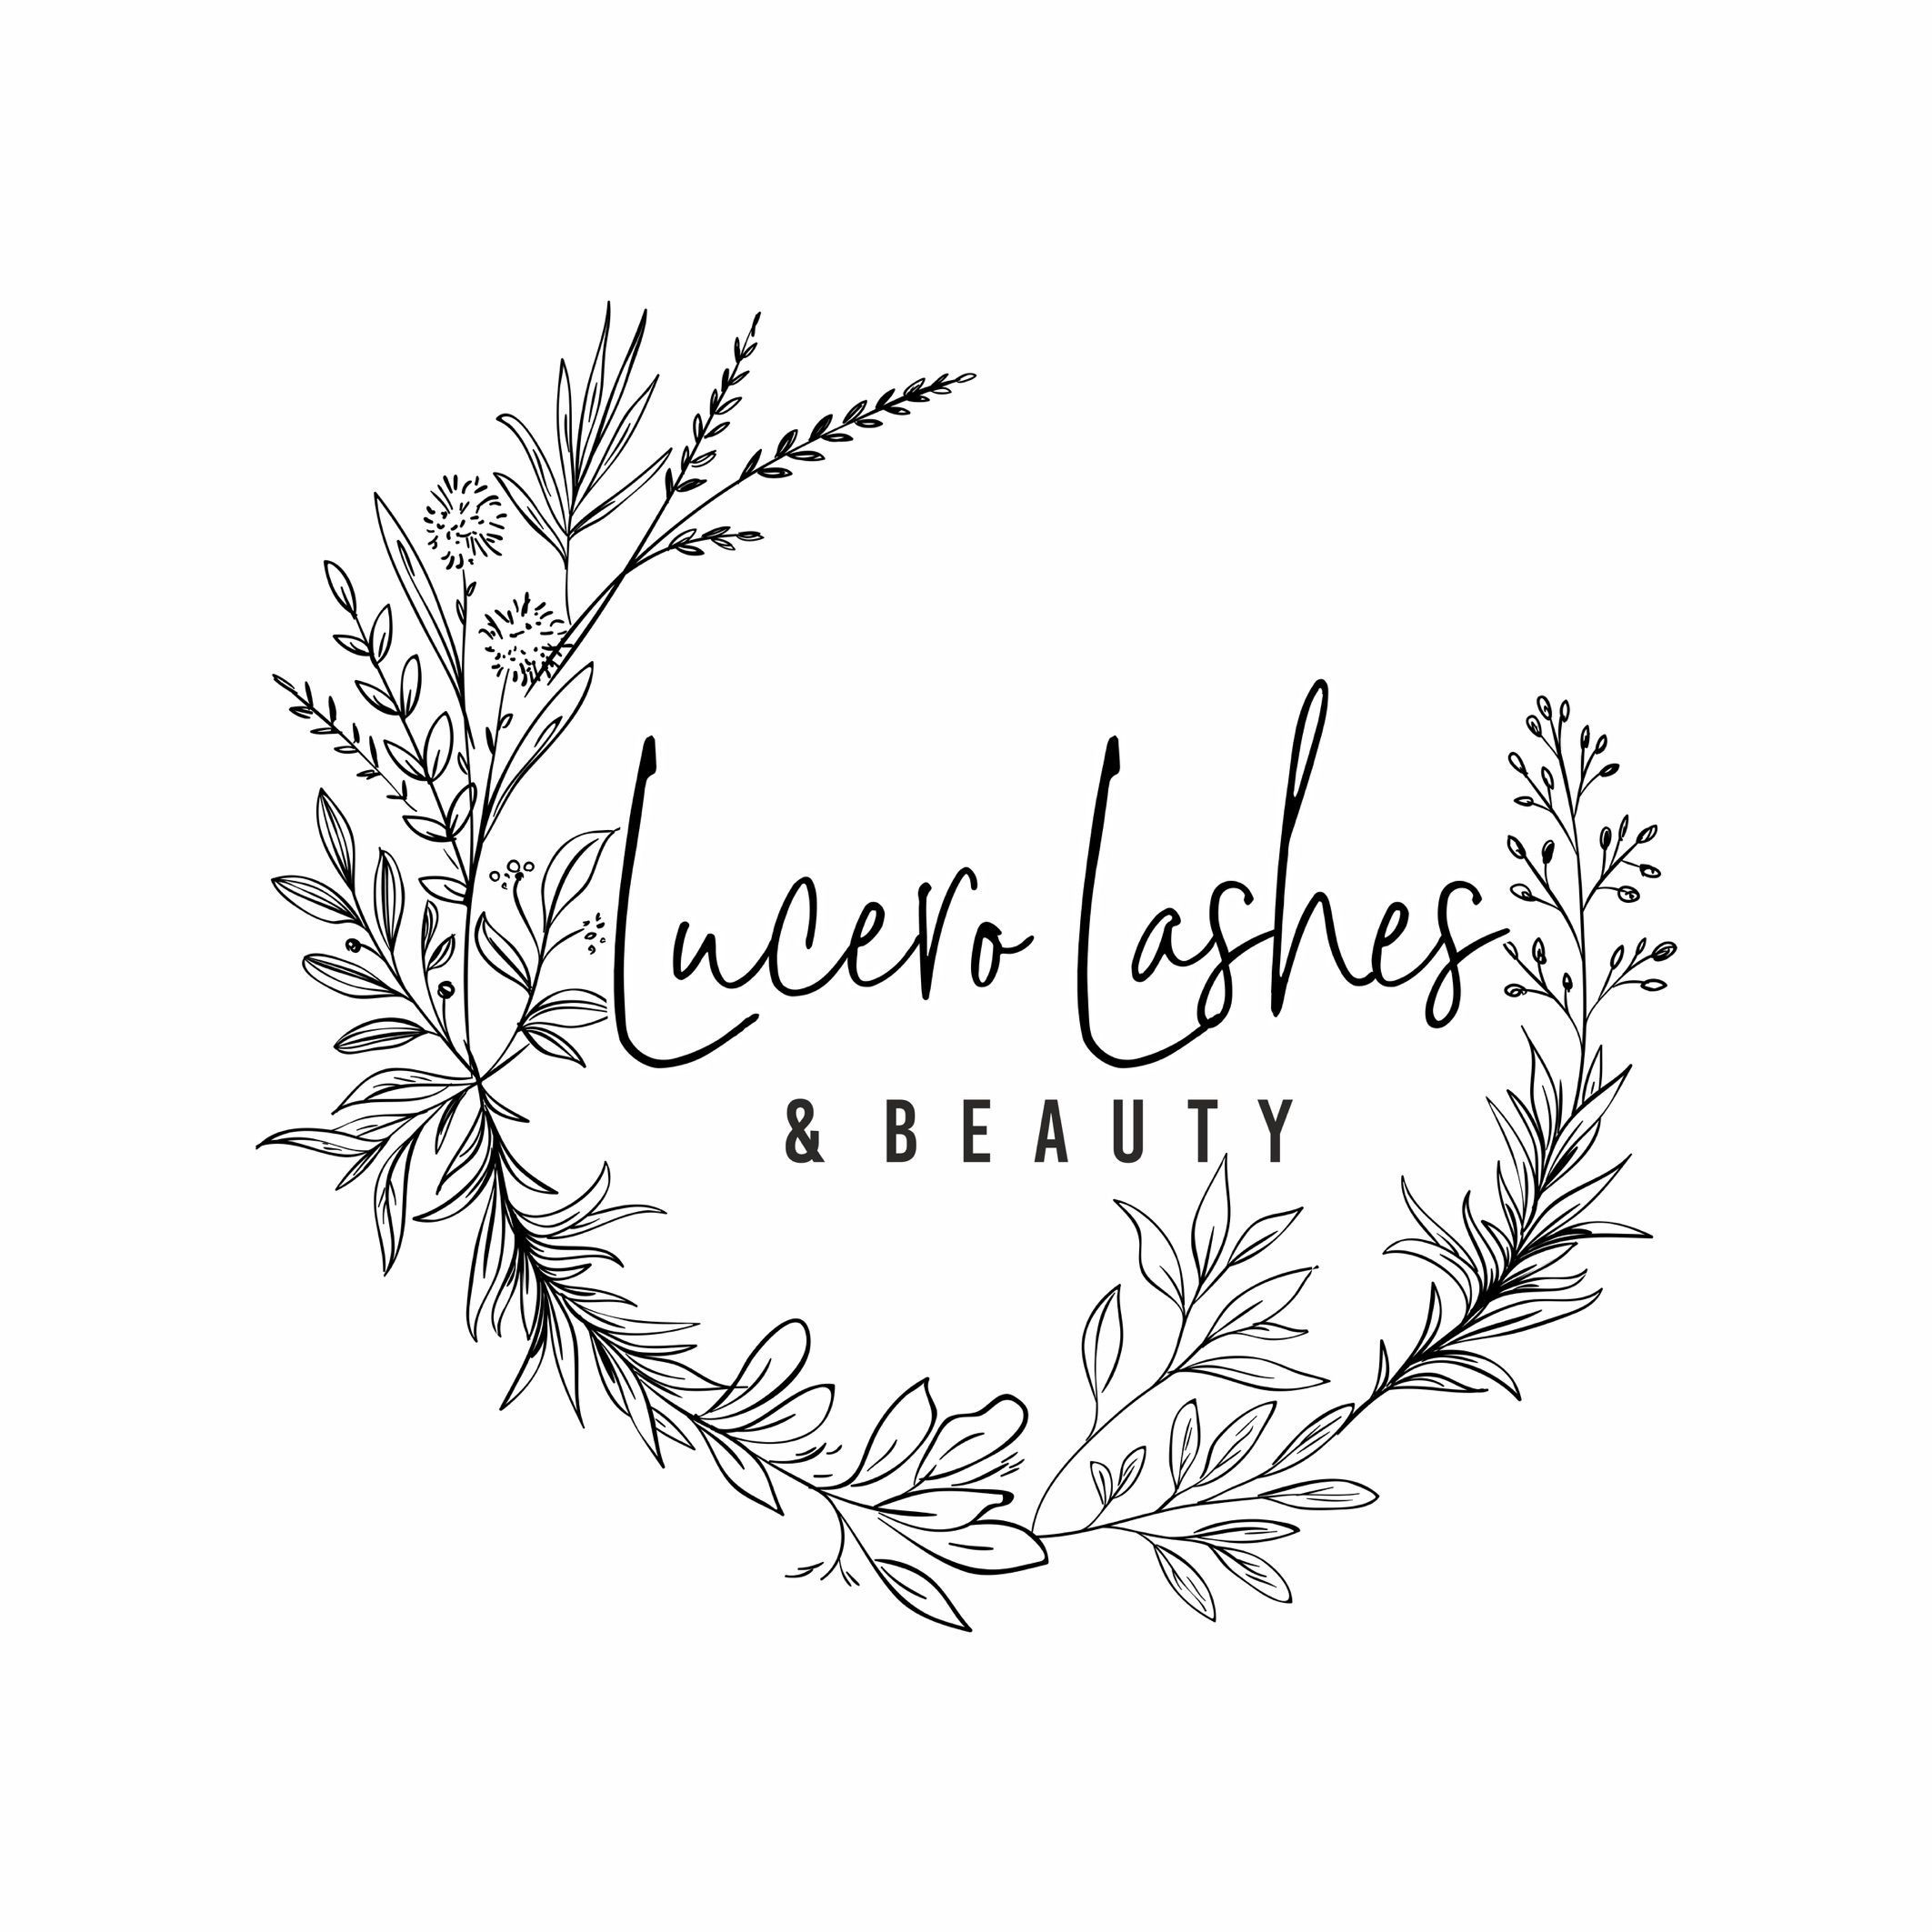 Lucero Lashes & Beauty, Avalon park, South San Francisco, 94080